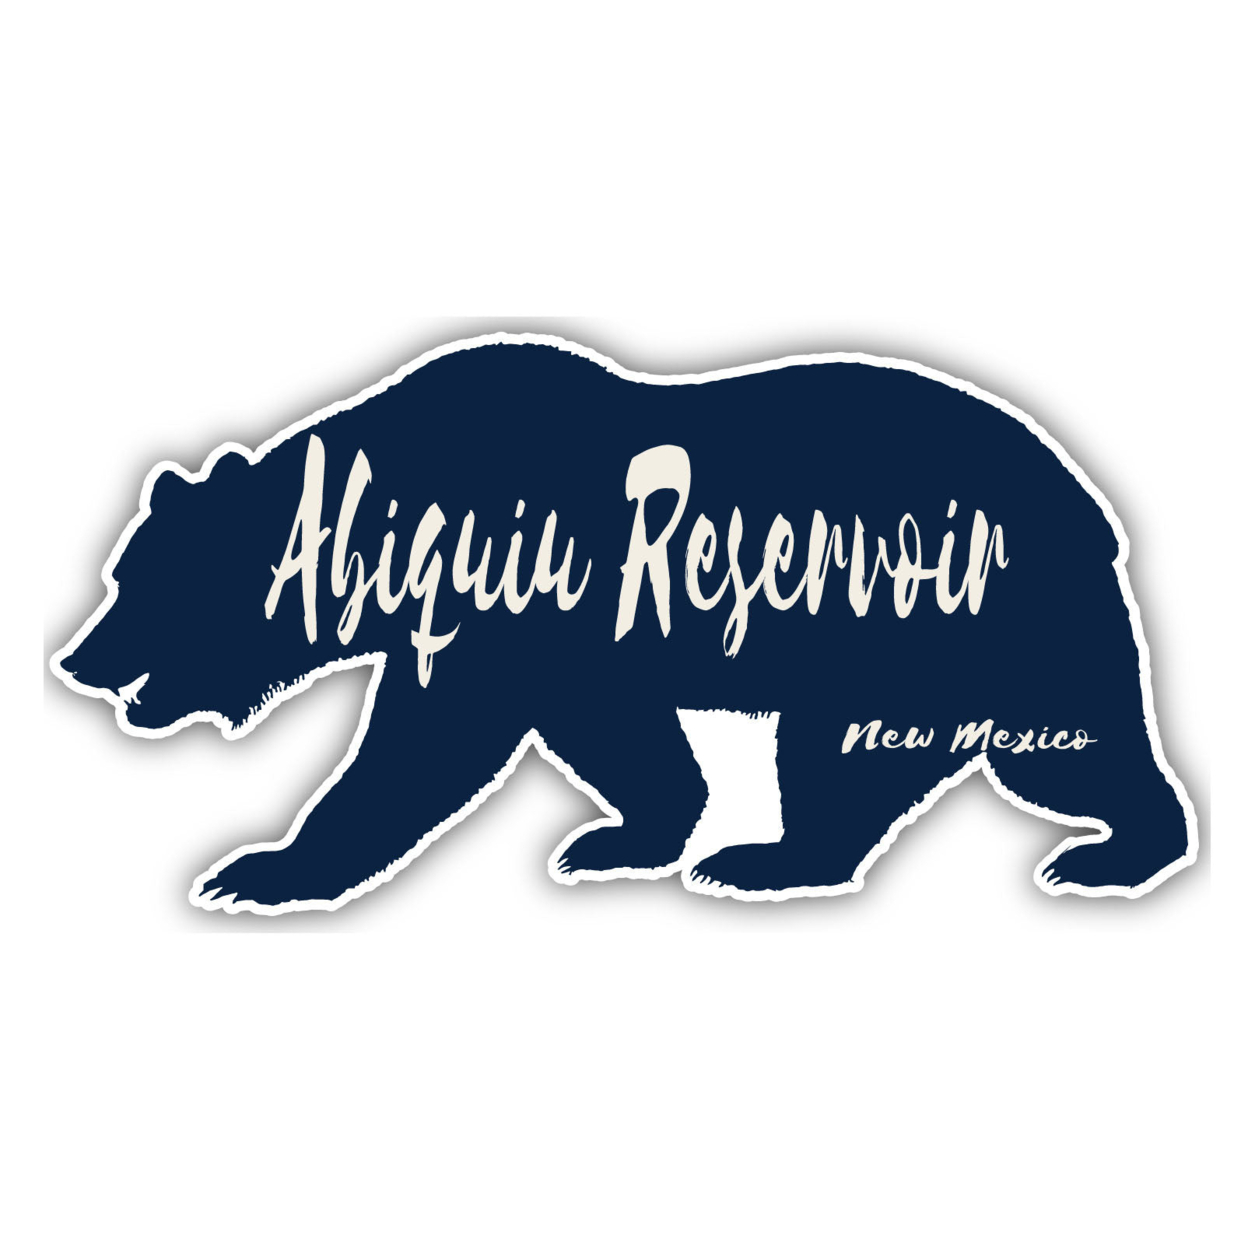 Abiquiu Reservoir New Mexico Souvenir Decorative Stickers (Choose Theme And Size) - 4-Pack, 8-Inch, Bear